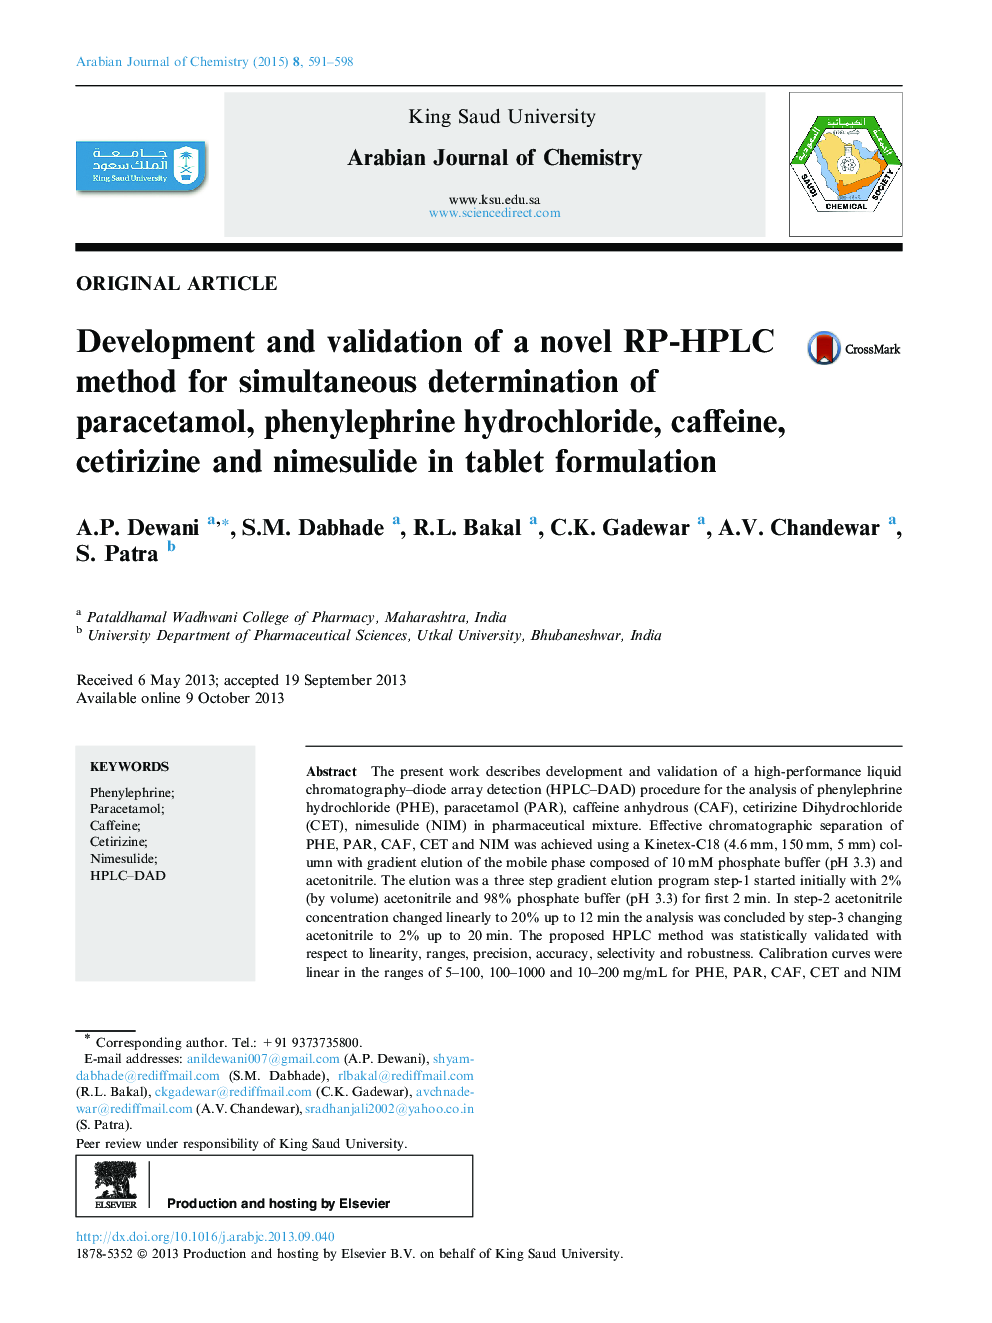 Development and validation of a novel RP-HPLC method for simultaneous determination of paracetamol, phenylephrine hydrochloride, caffeine, cetirizine and nimesulide in tablet formulation 